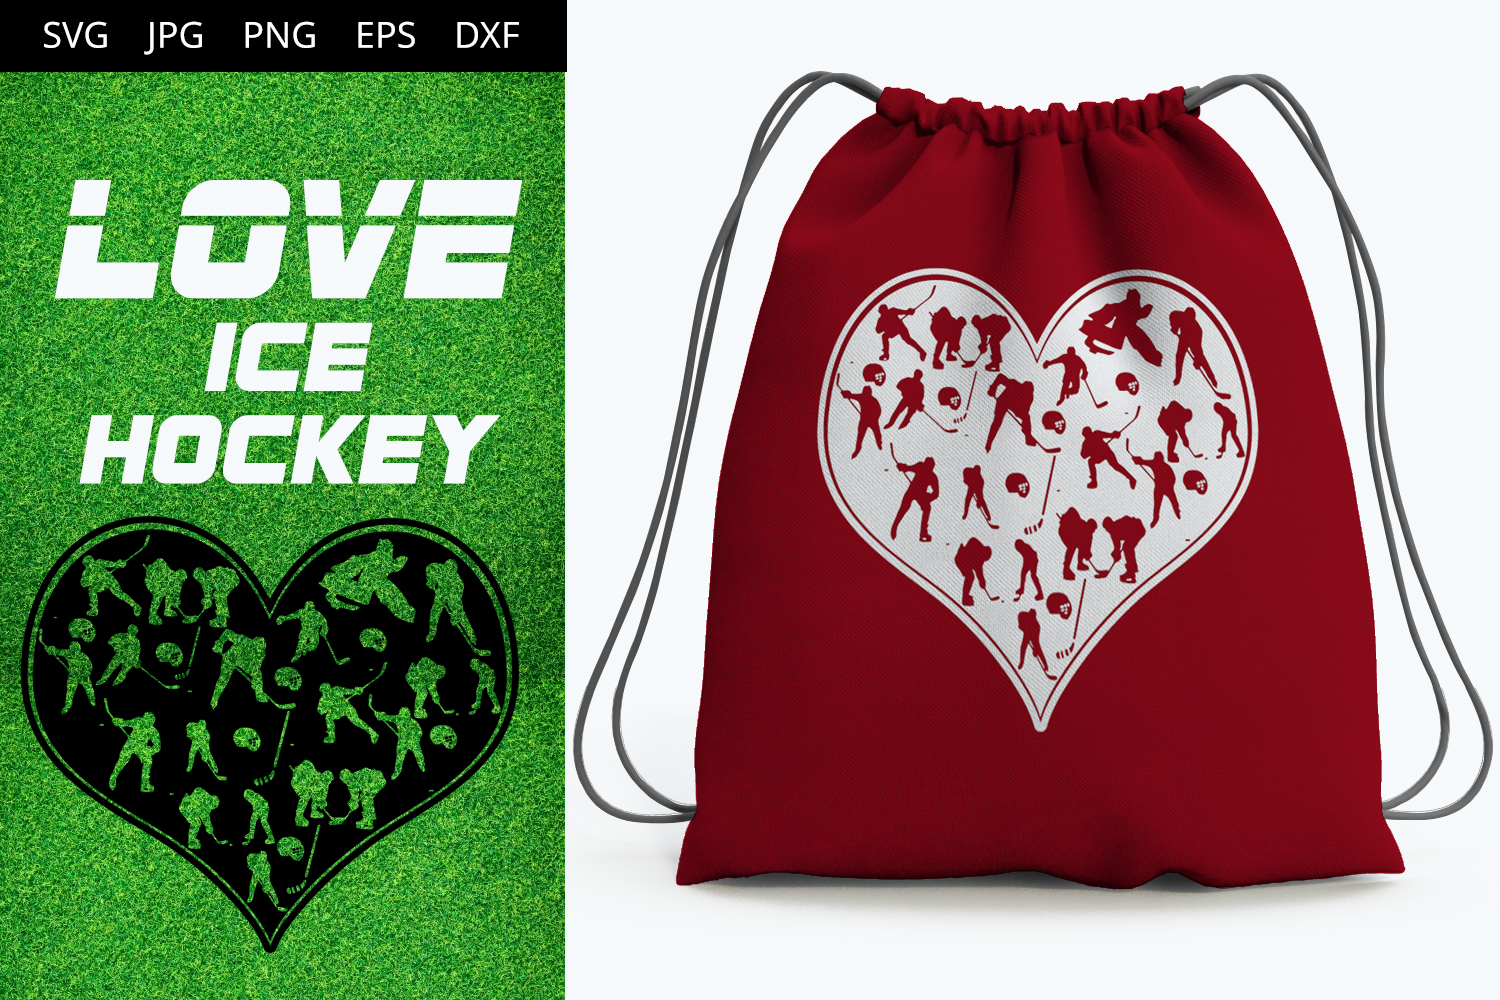 Download Love Ice Hockey SVG Vector